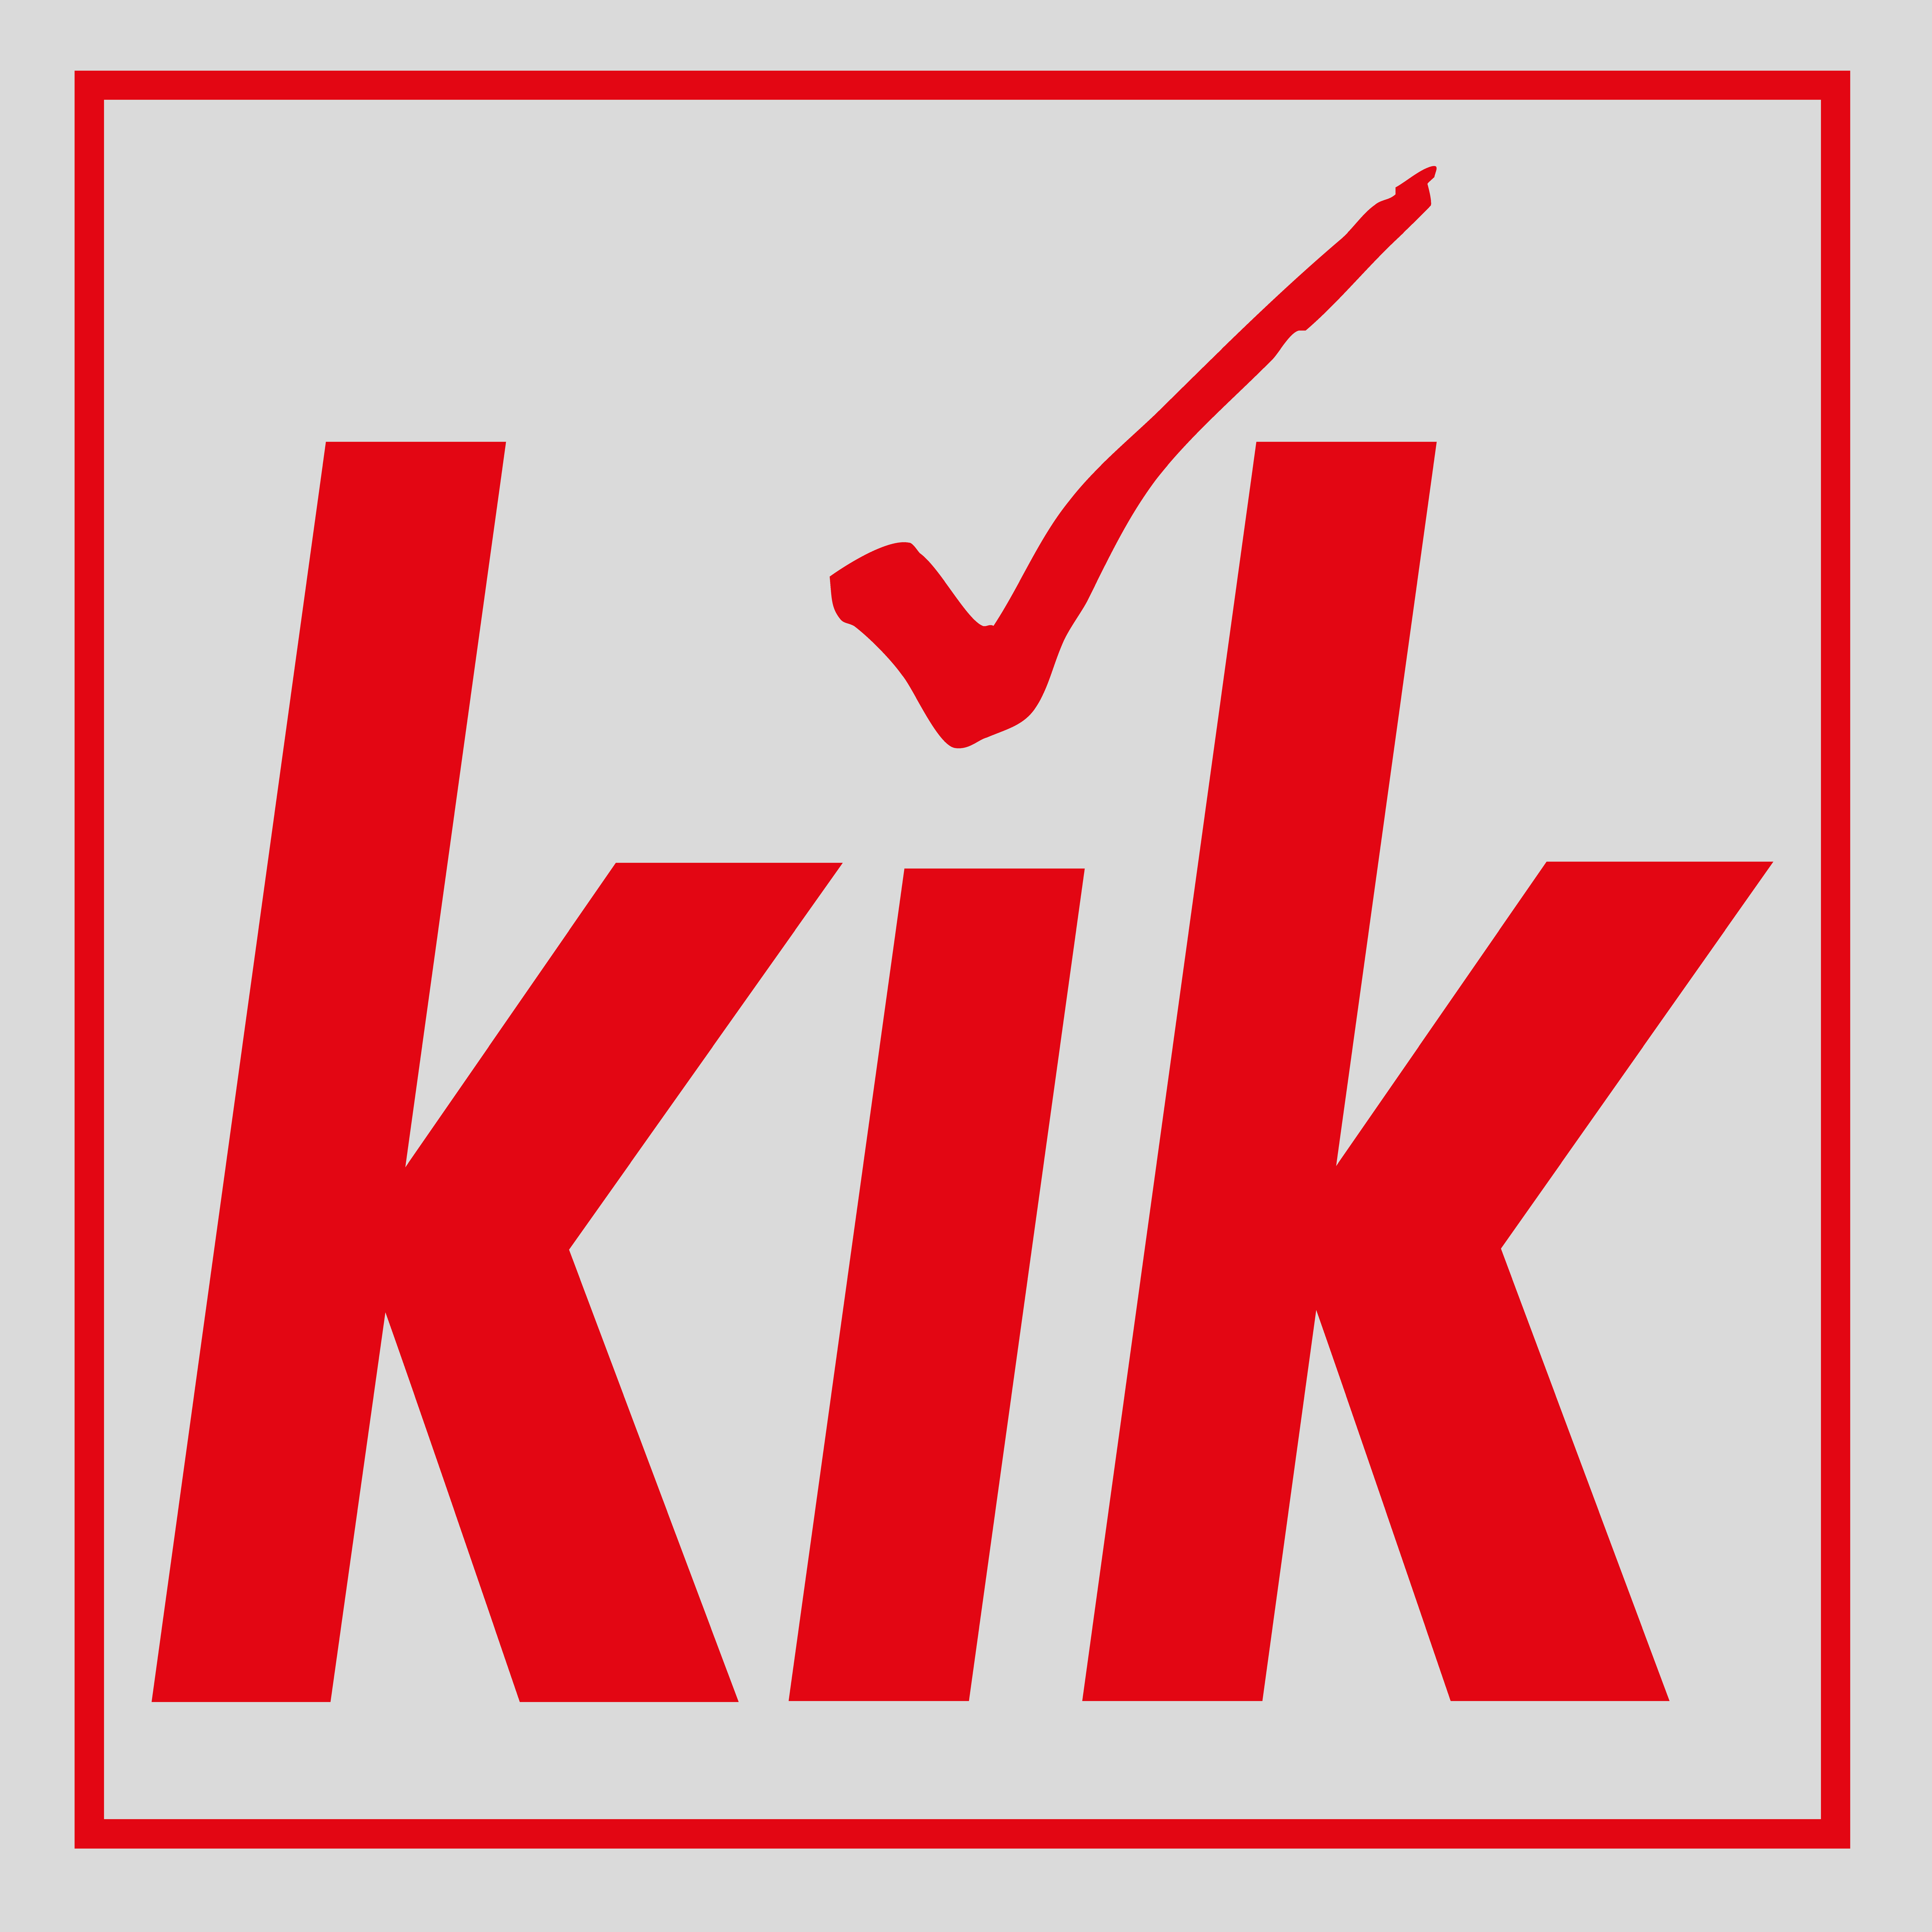 KiK eröffnet am 31. August! 